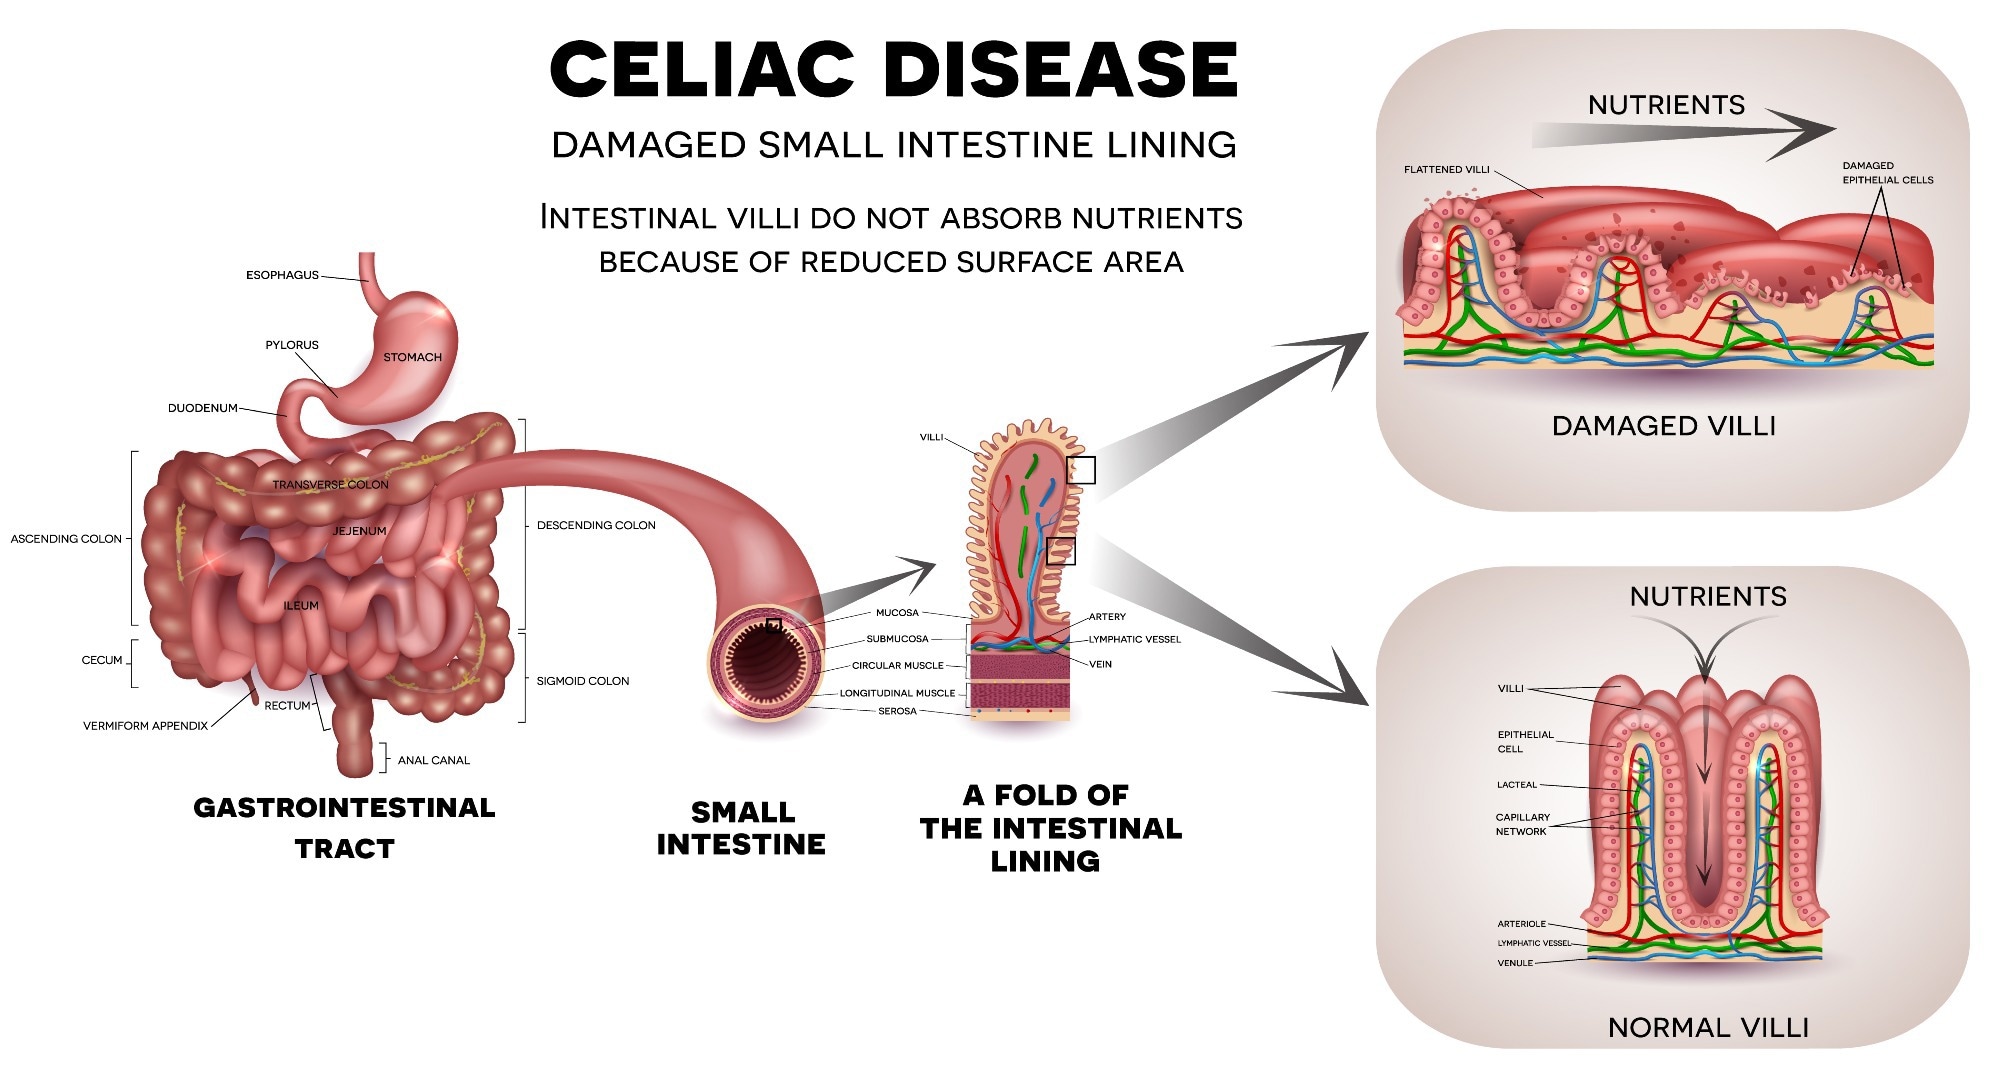 Celiac disease affected small intestine.Image Credit: Tefi / Shutterstock